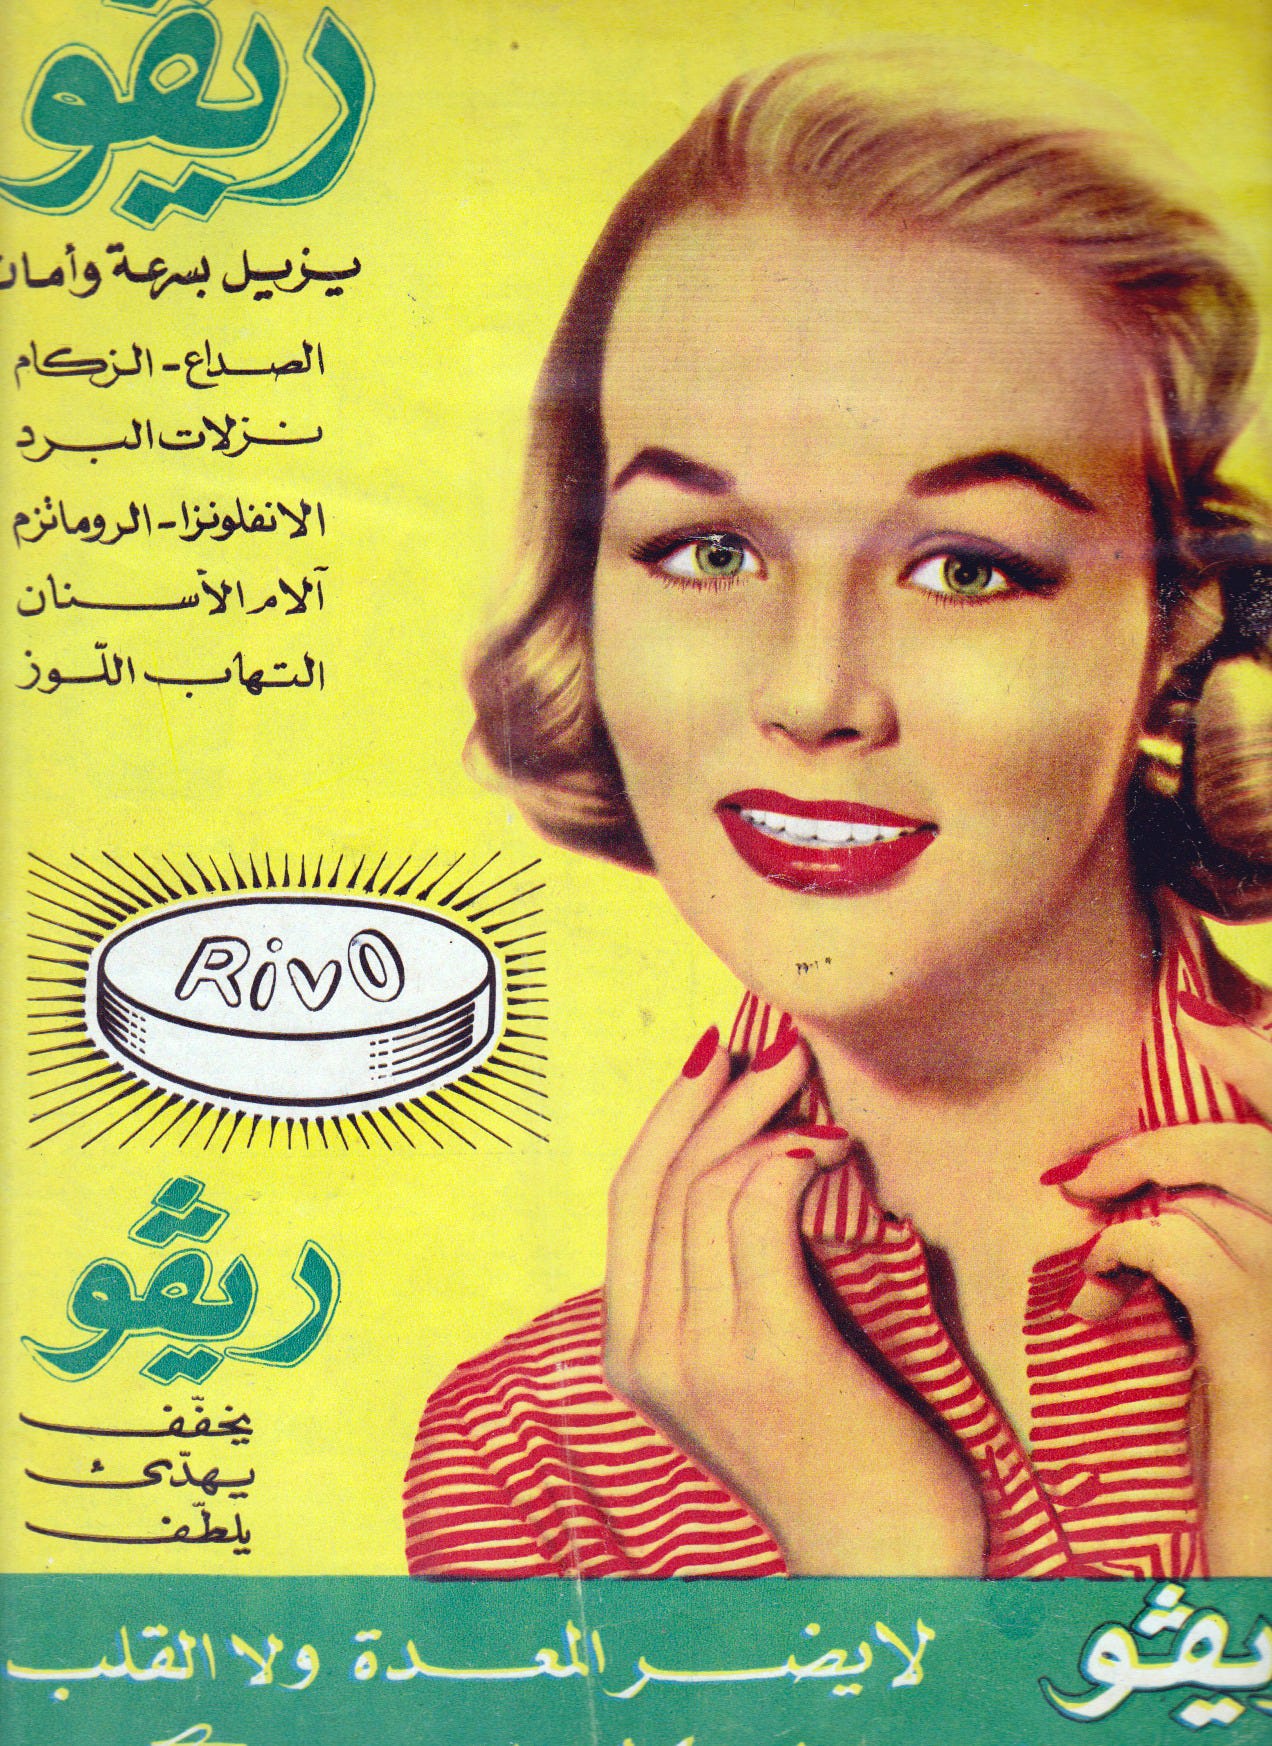 Rivo pain killer ad, 1959